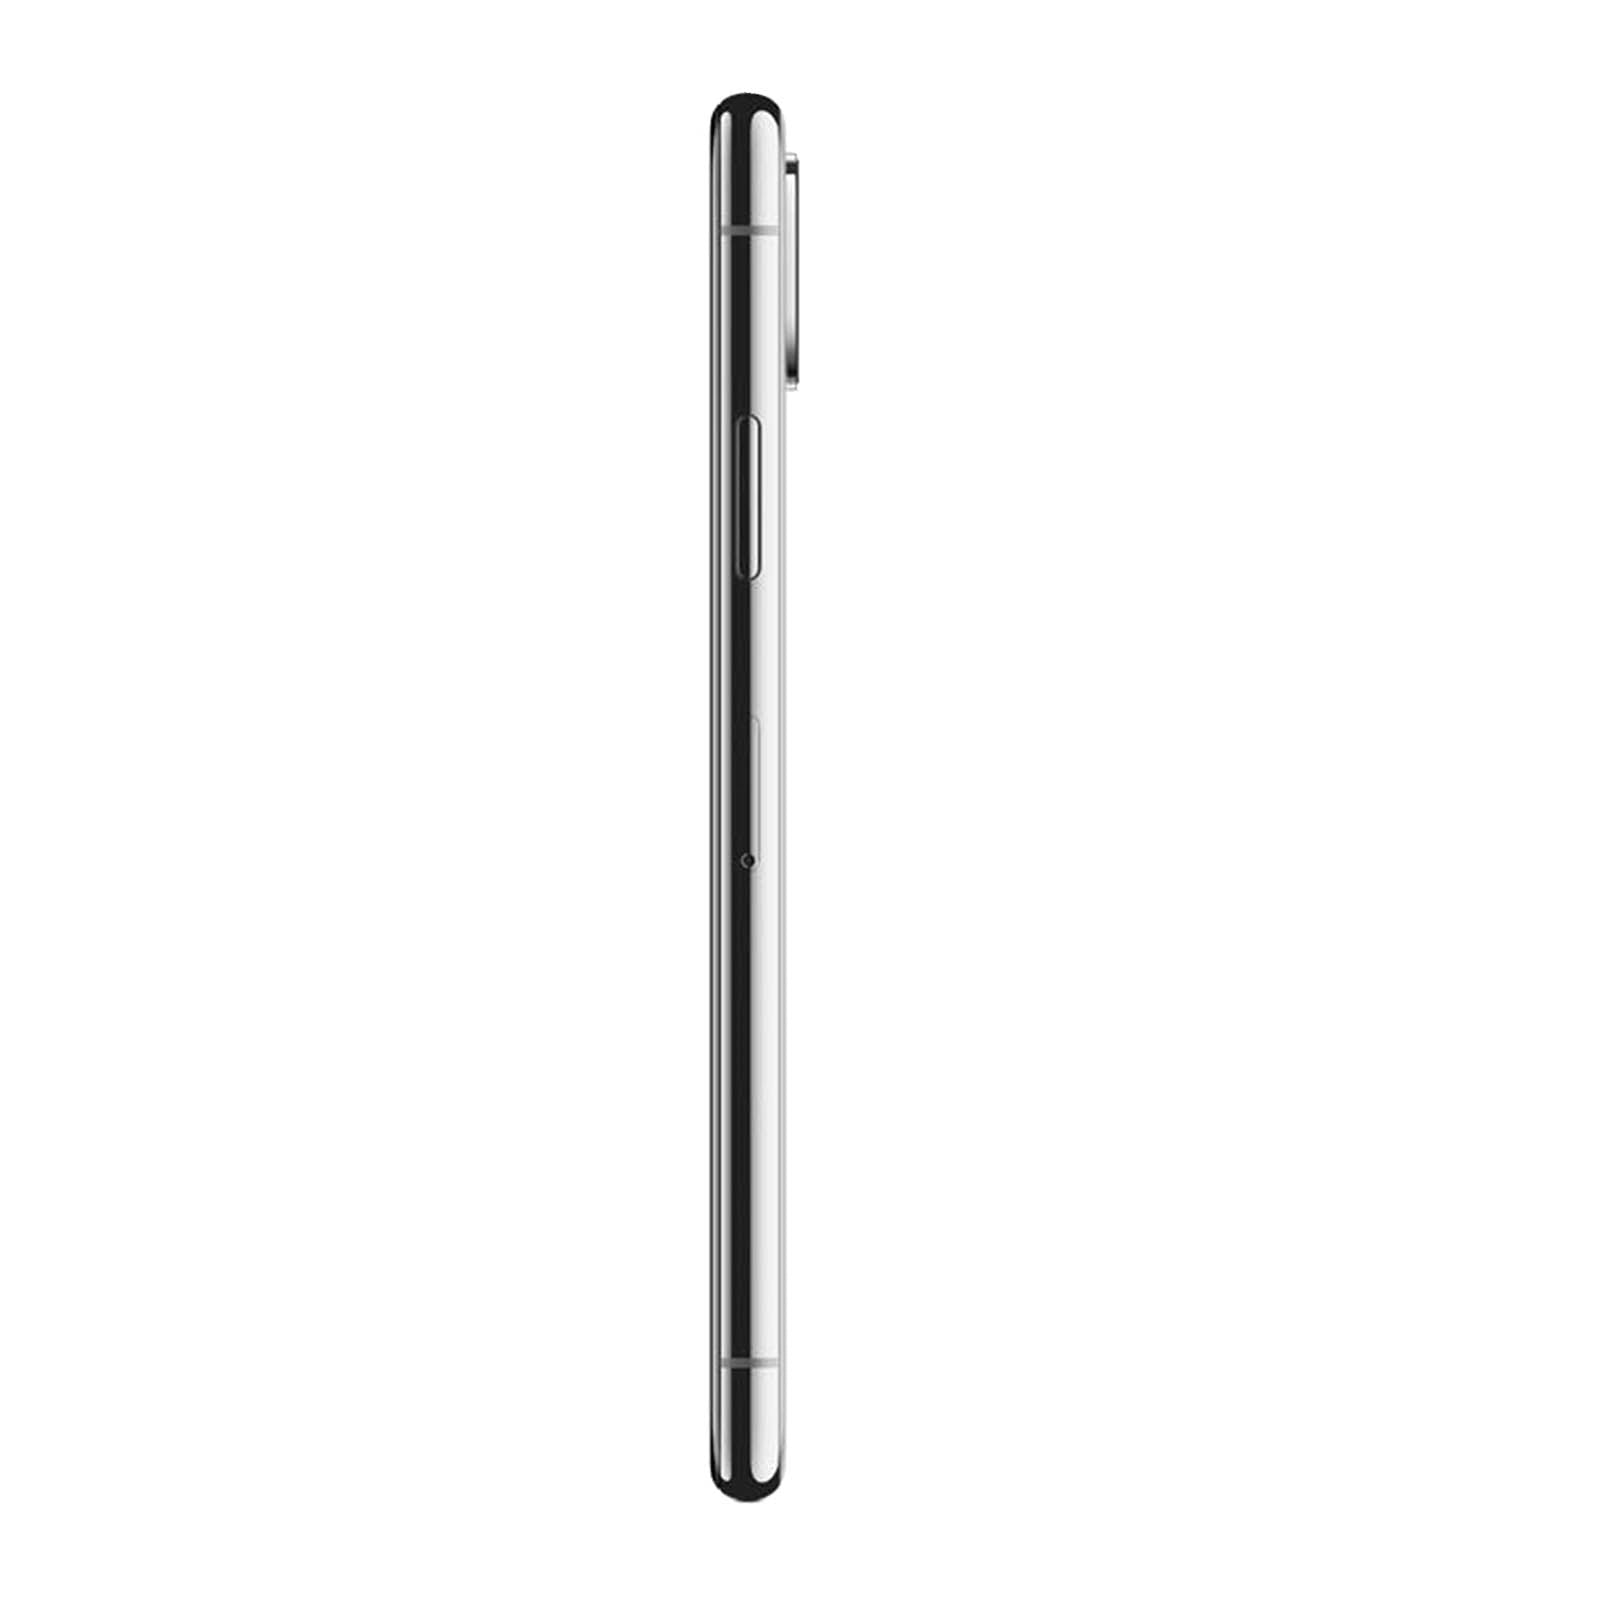 Apple iPhone XS Max 64GB Space Grey Fair - Verizon